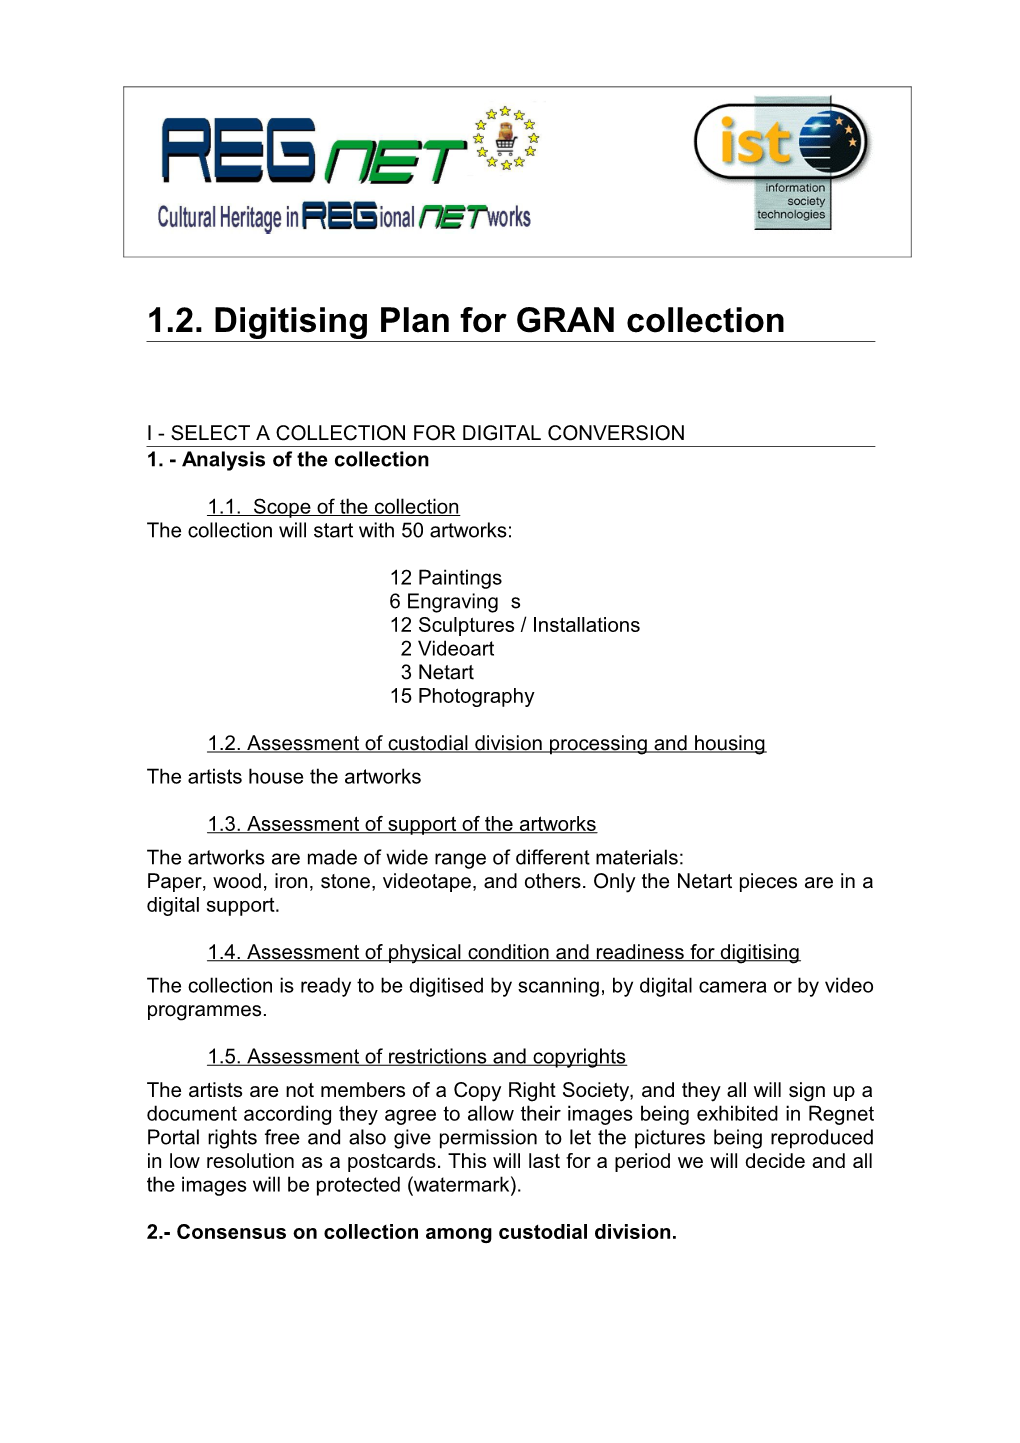 1.2. Digitising Plan for GRAN Collection